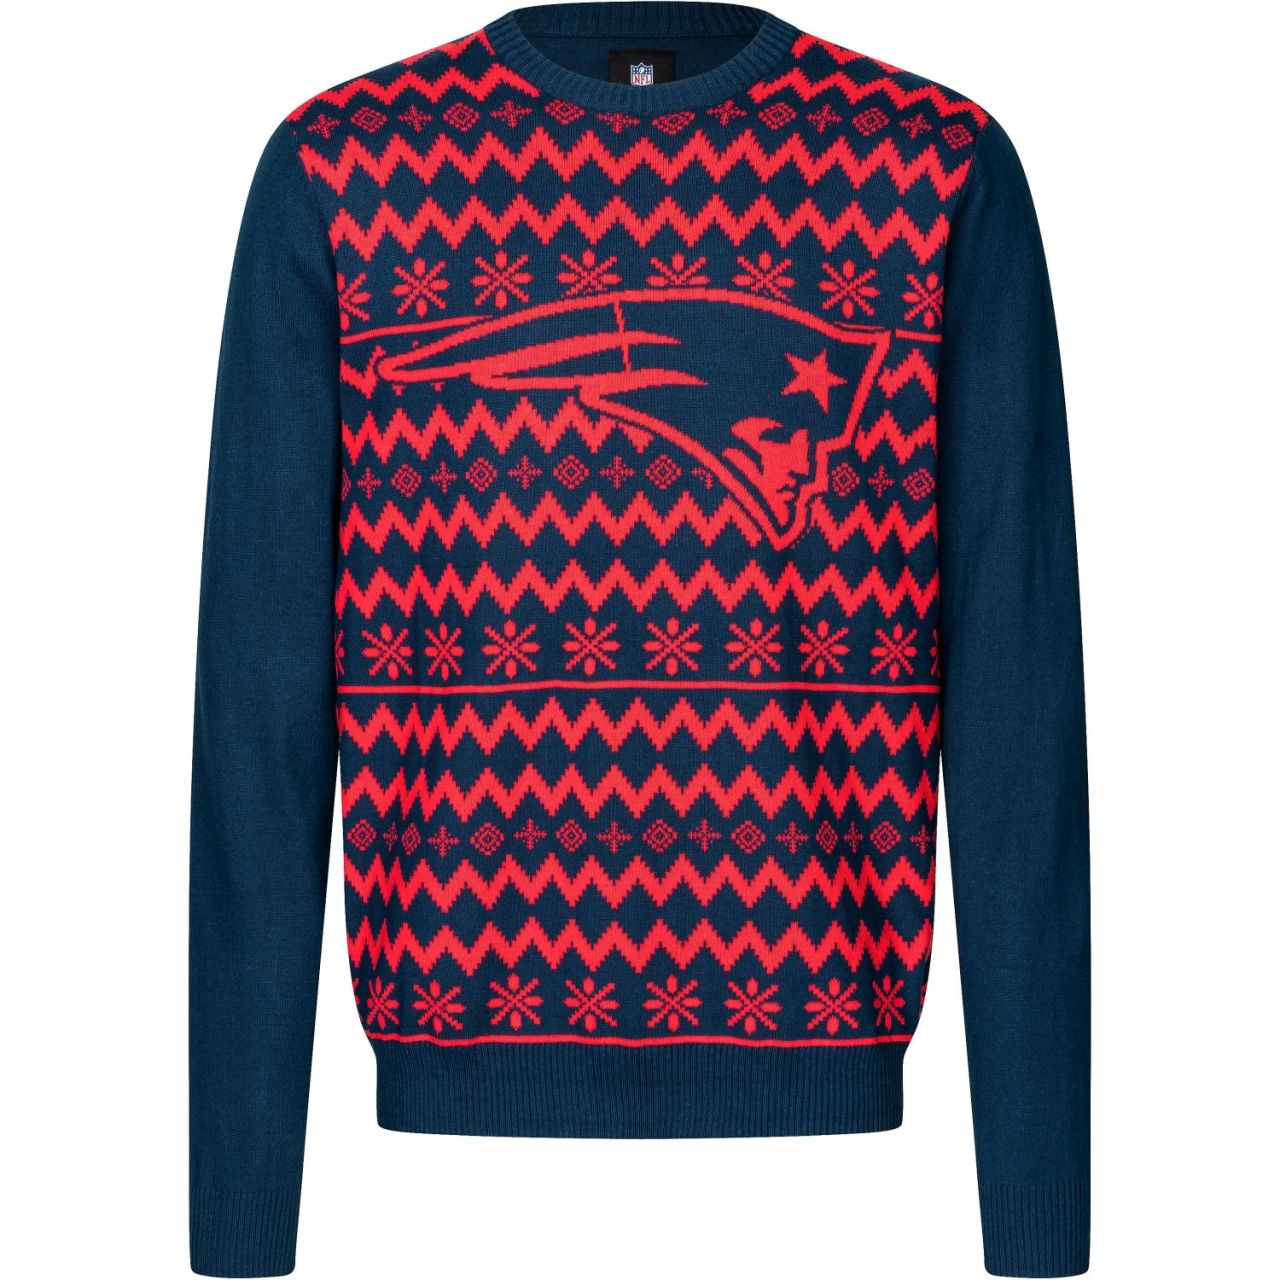 NFL Winter Sweater XMAS Strick Pullover New England Patriots von FOCO